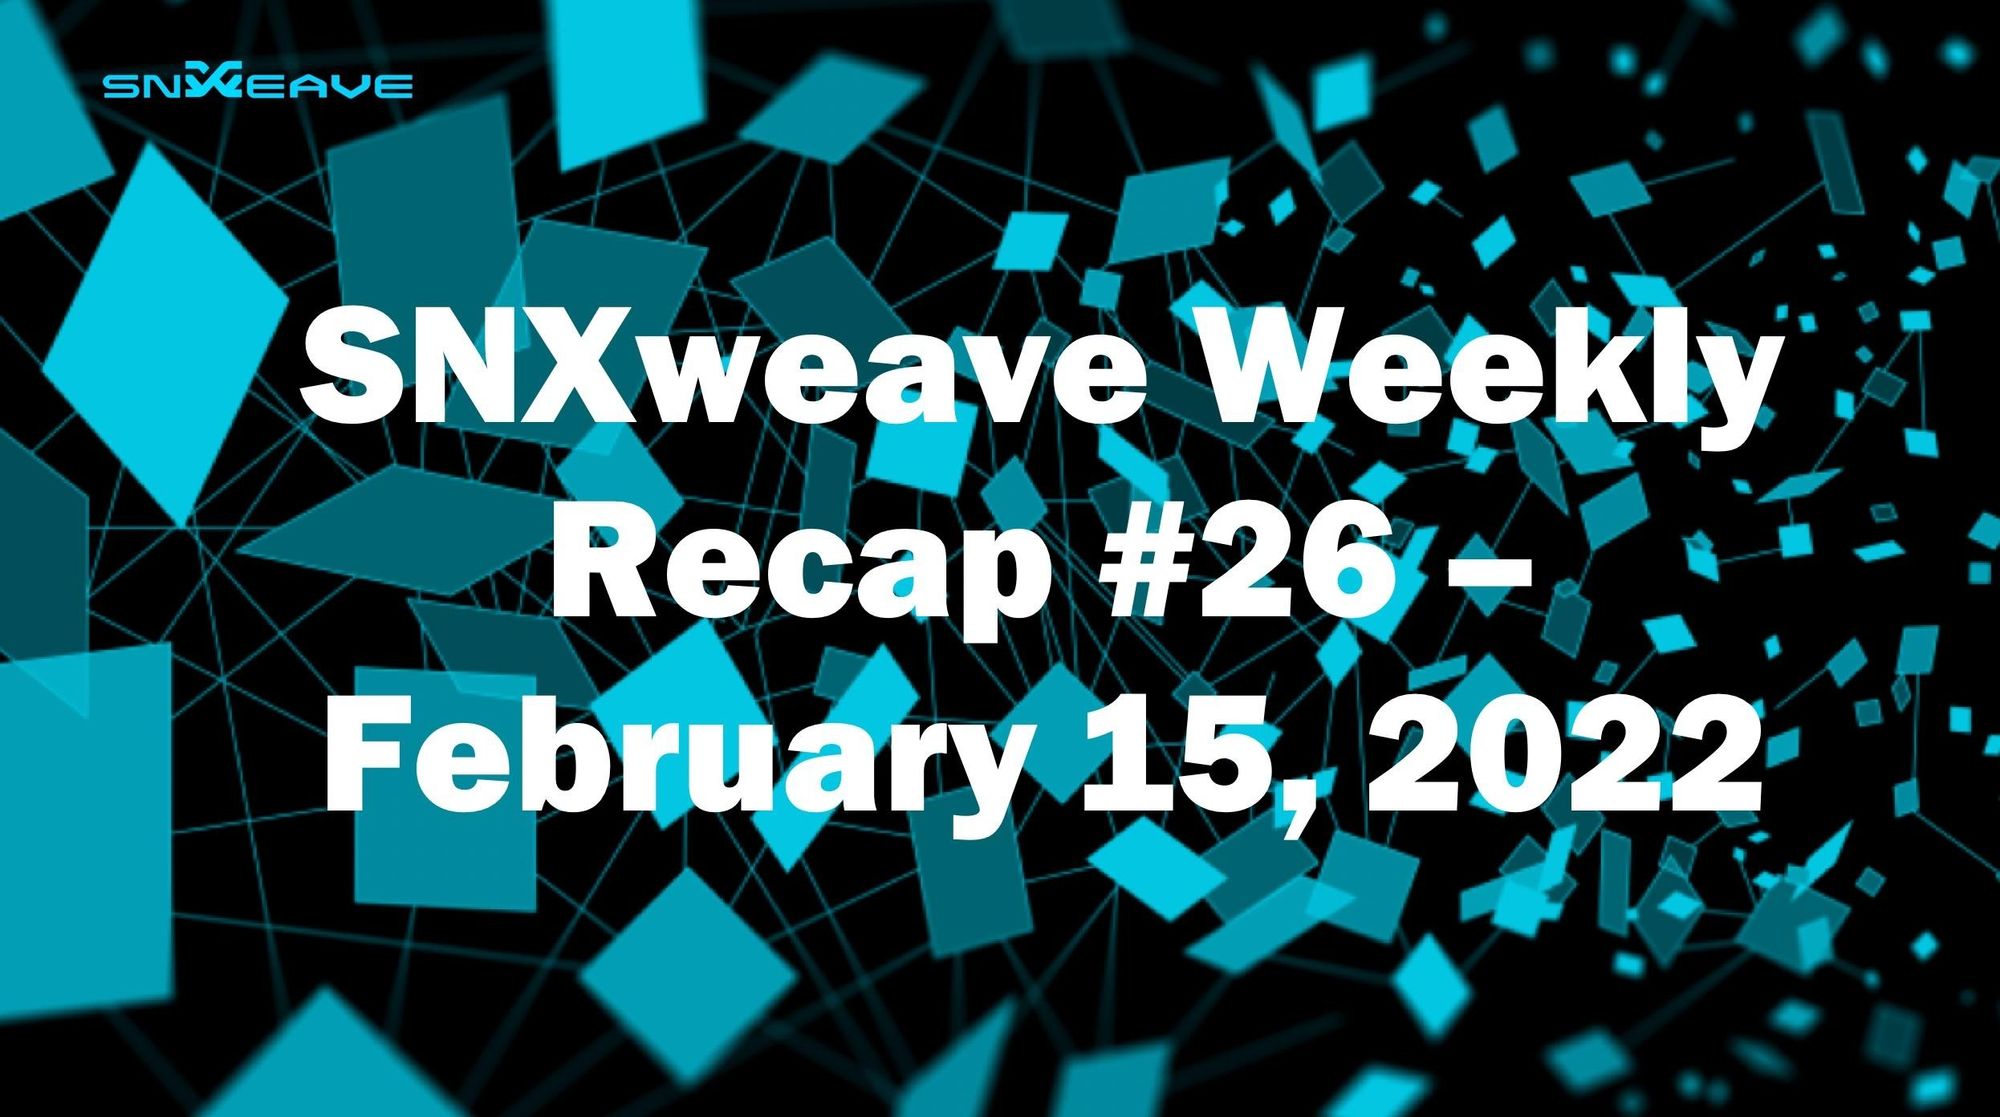 SNXweave Weekly Recap 26